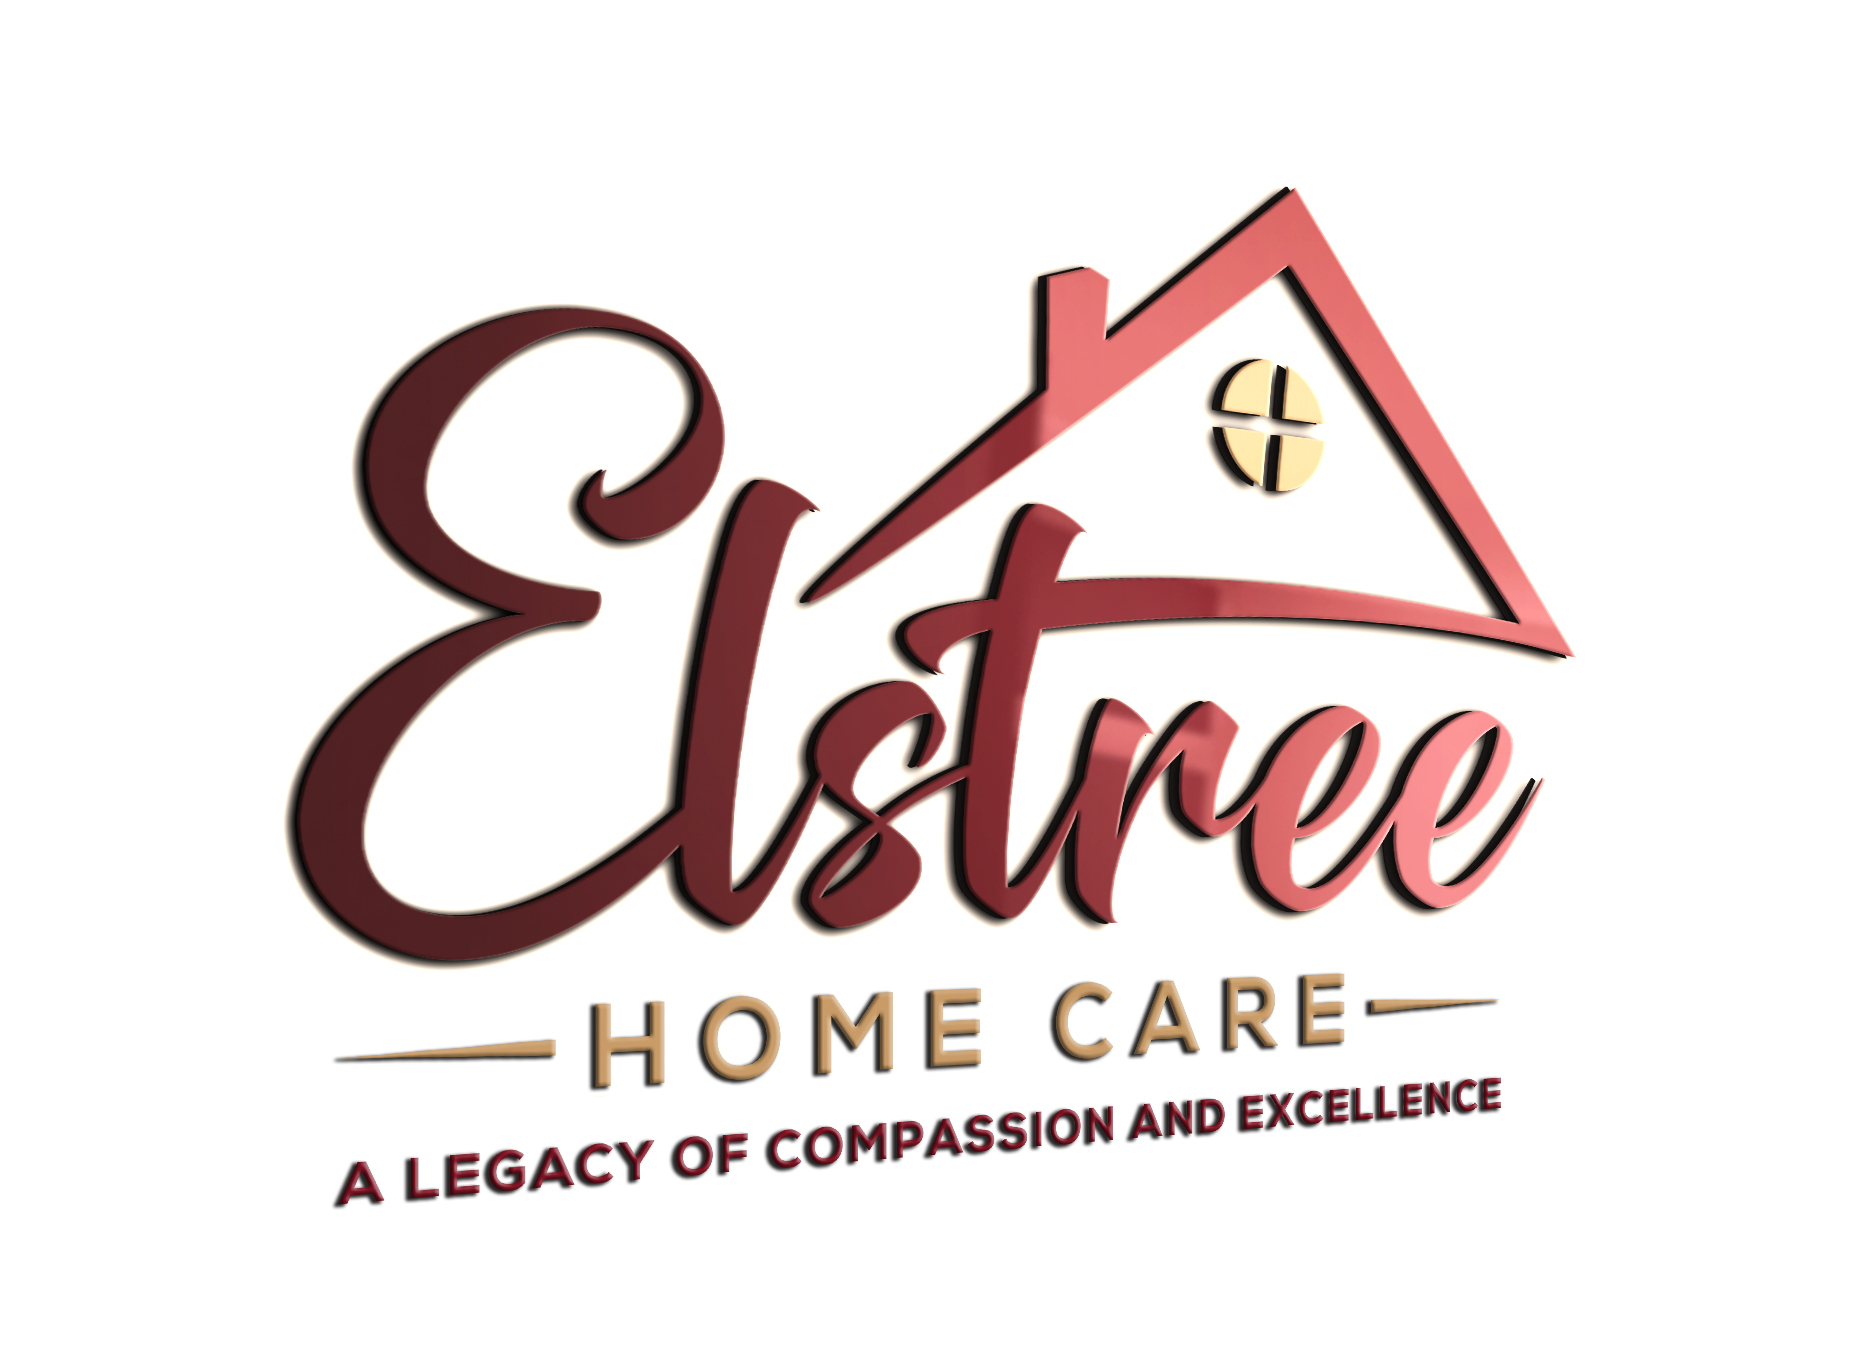 Elstree Home Care